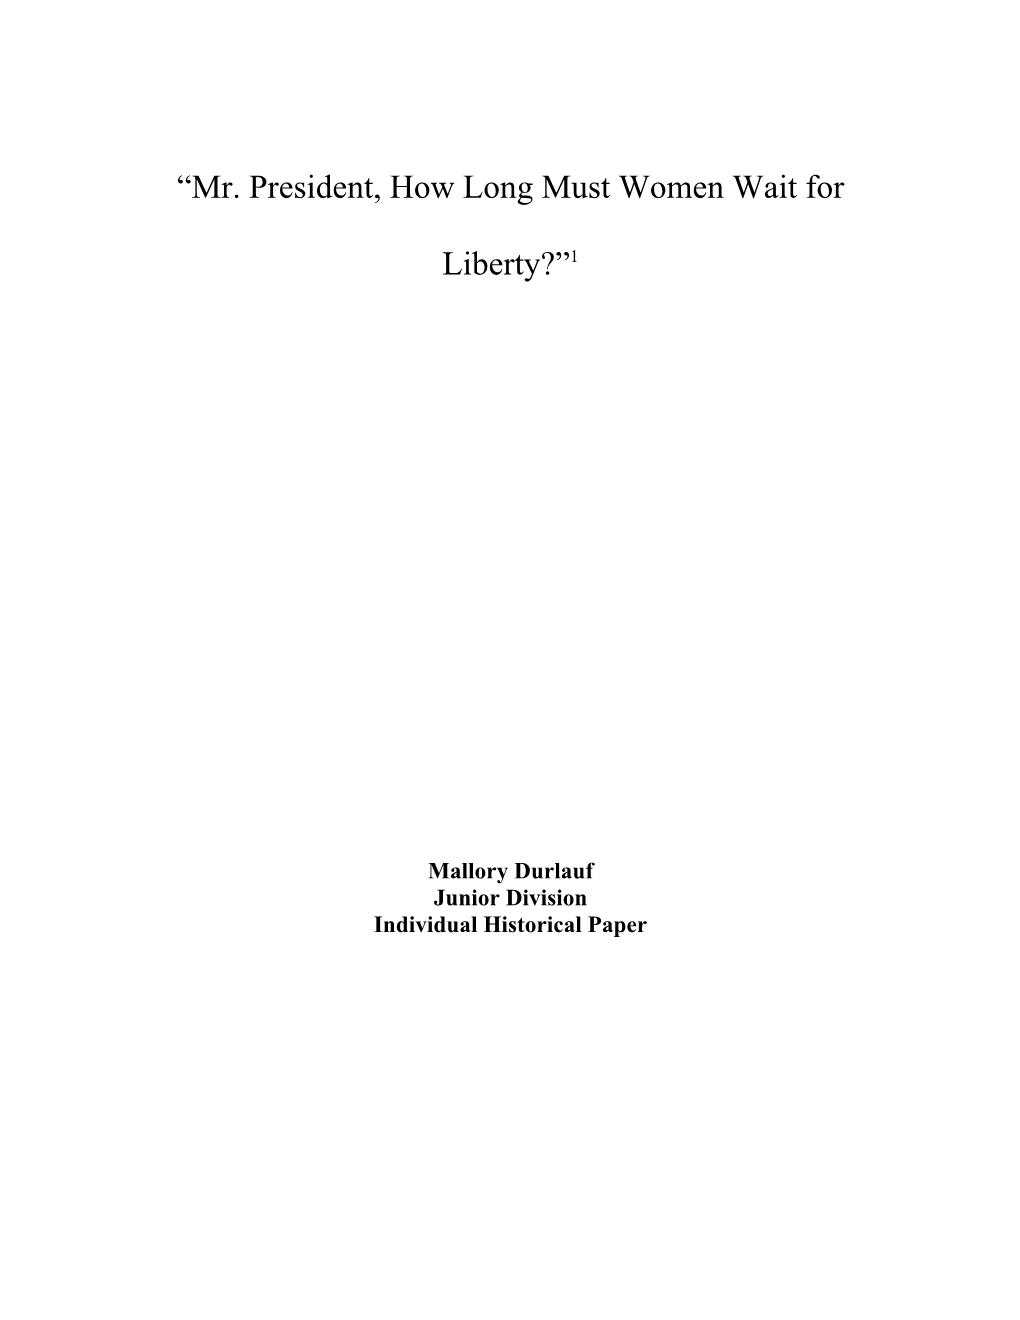 “Mr. President, How Long Must Women Wait for Liberty?”1